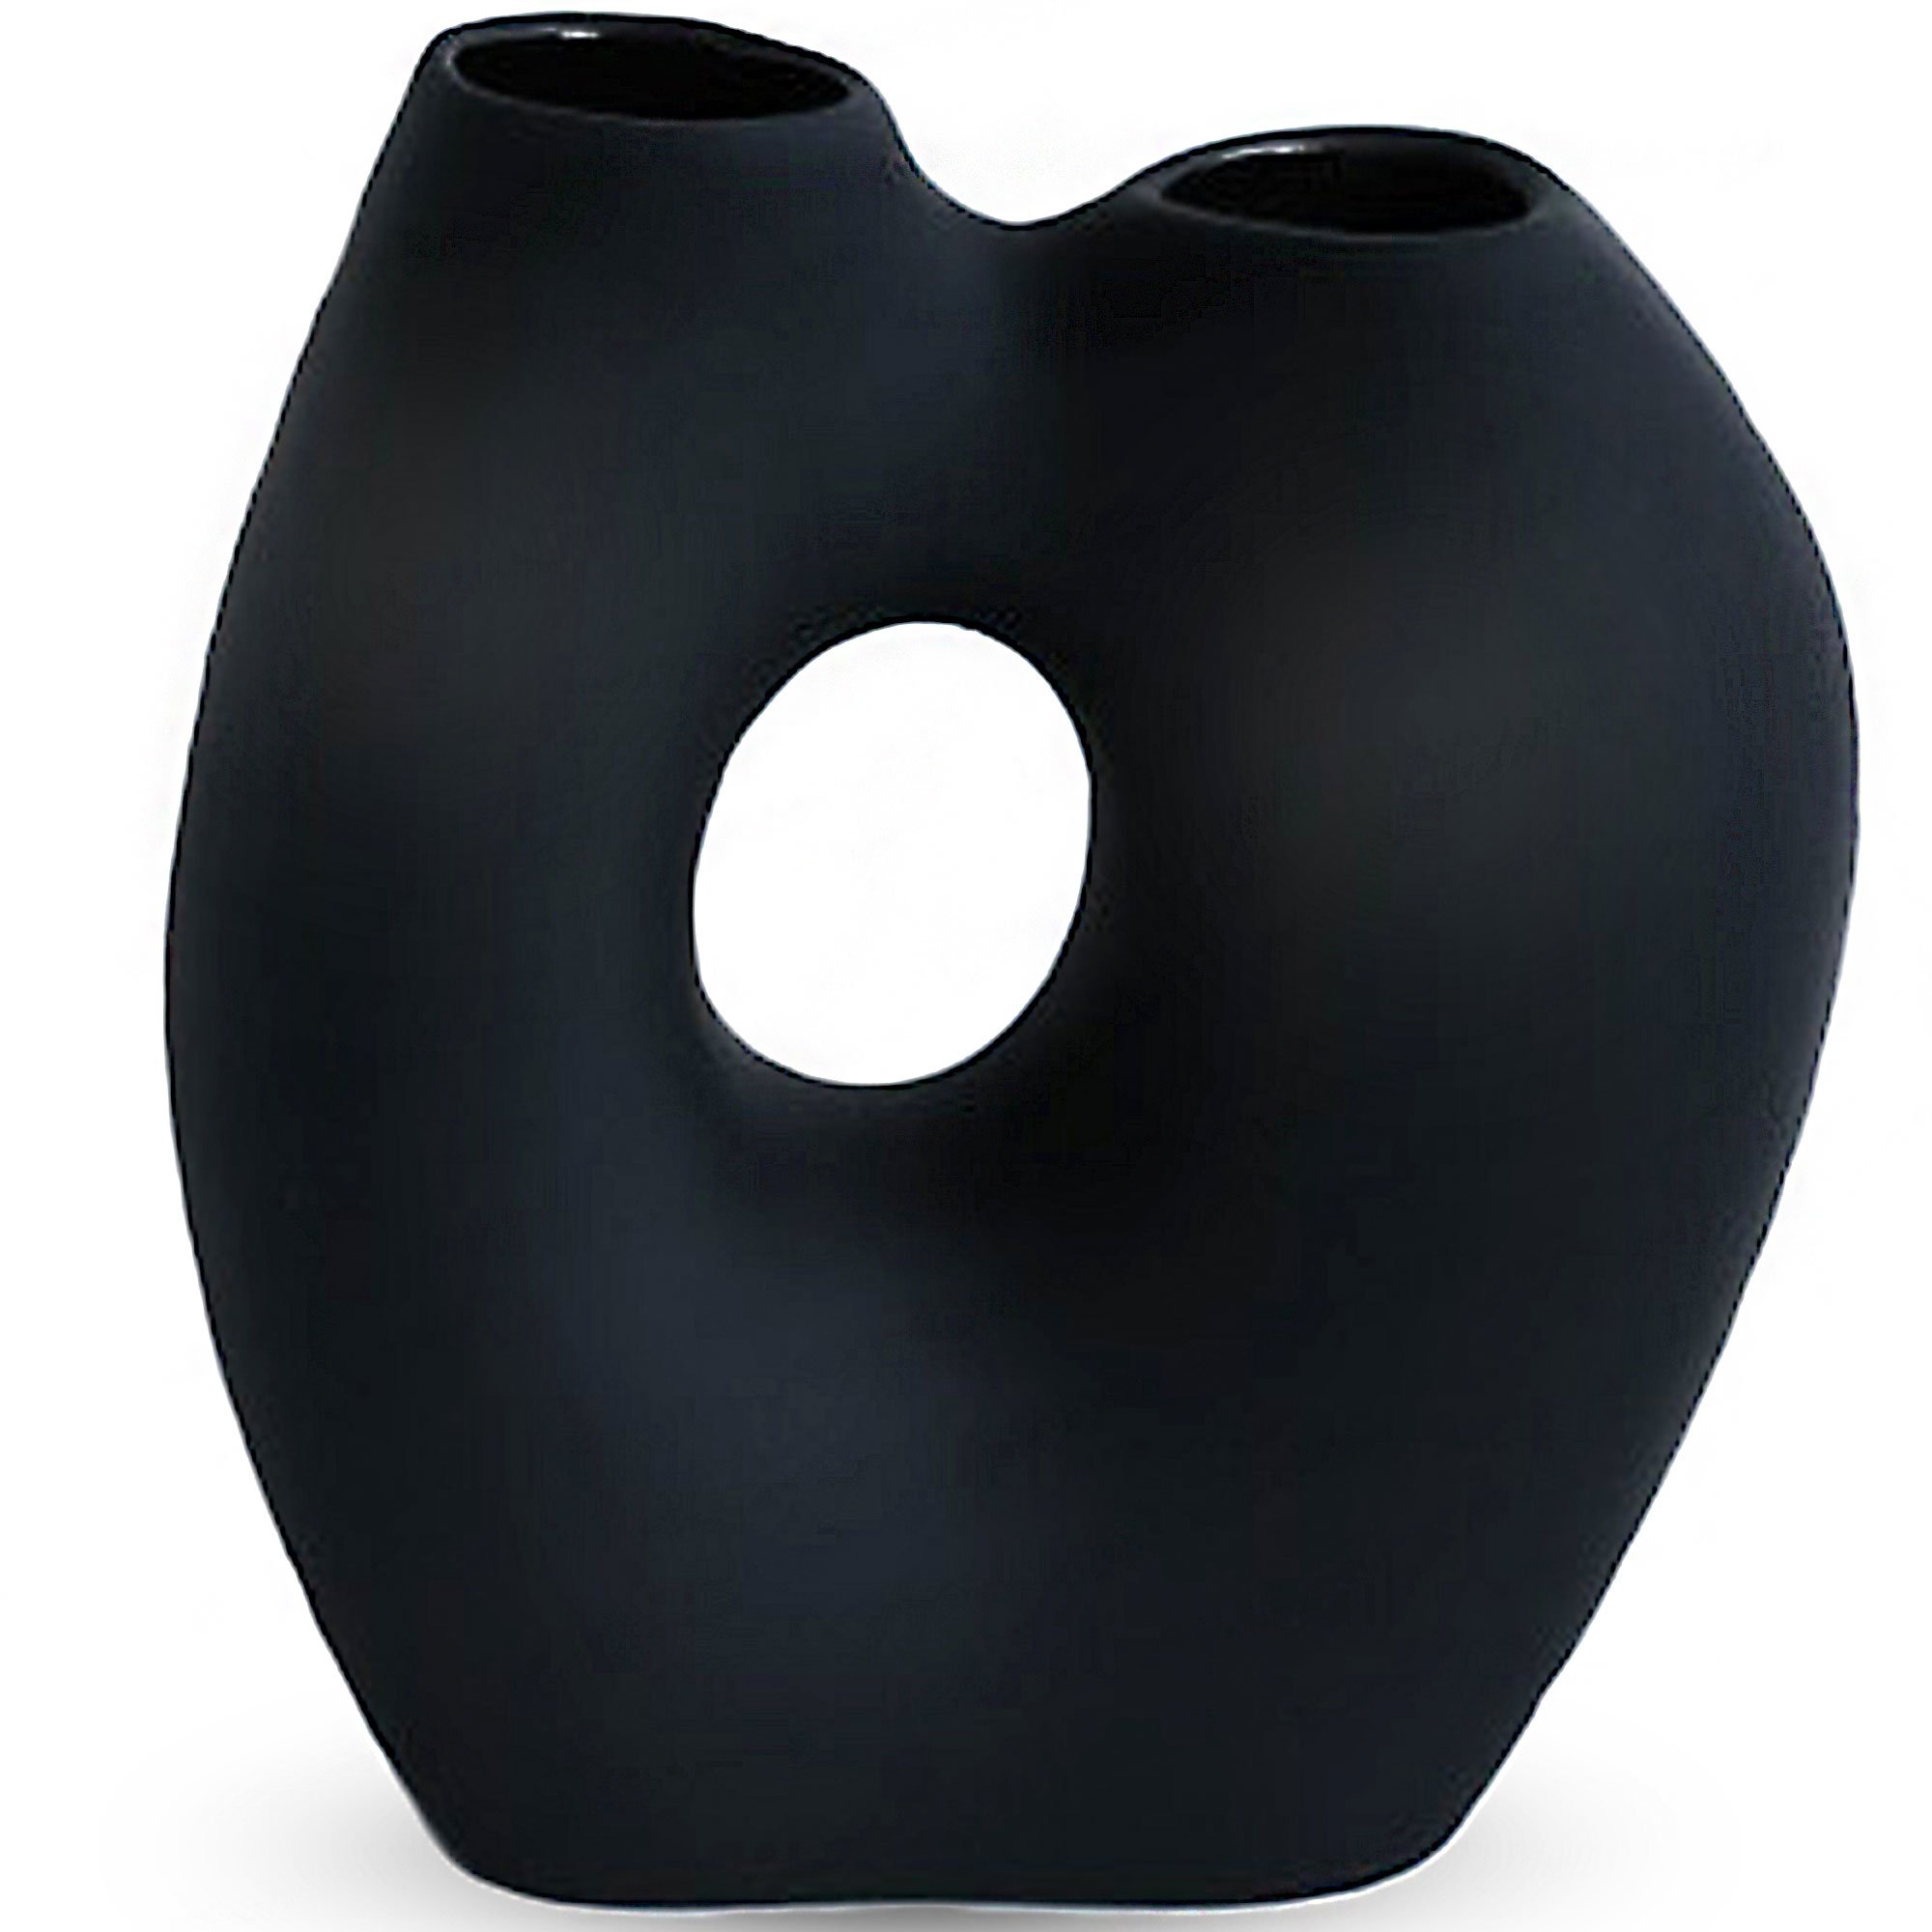 Cooee Design Frodig vas black